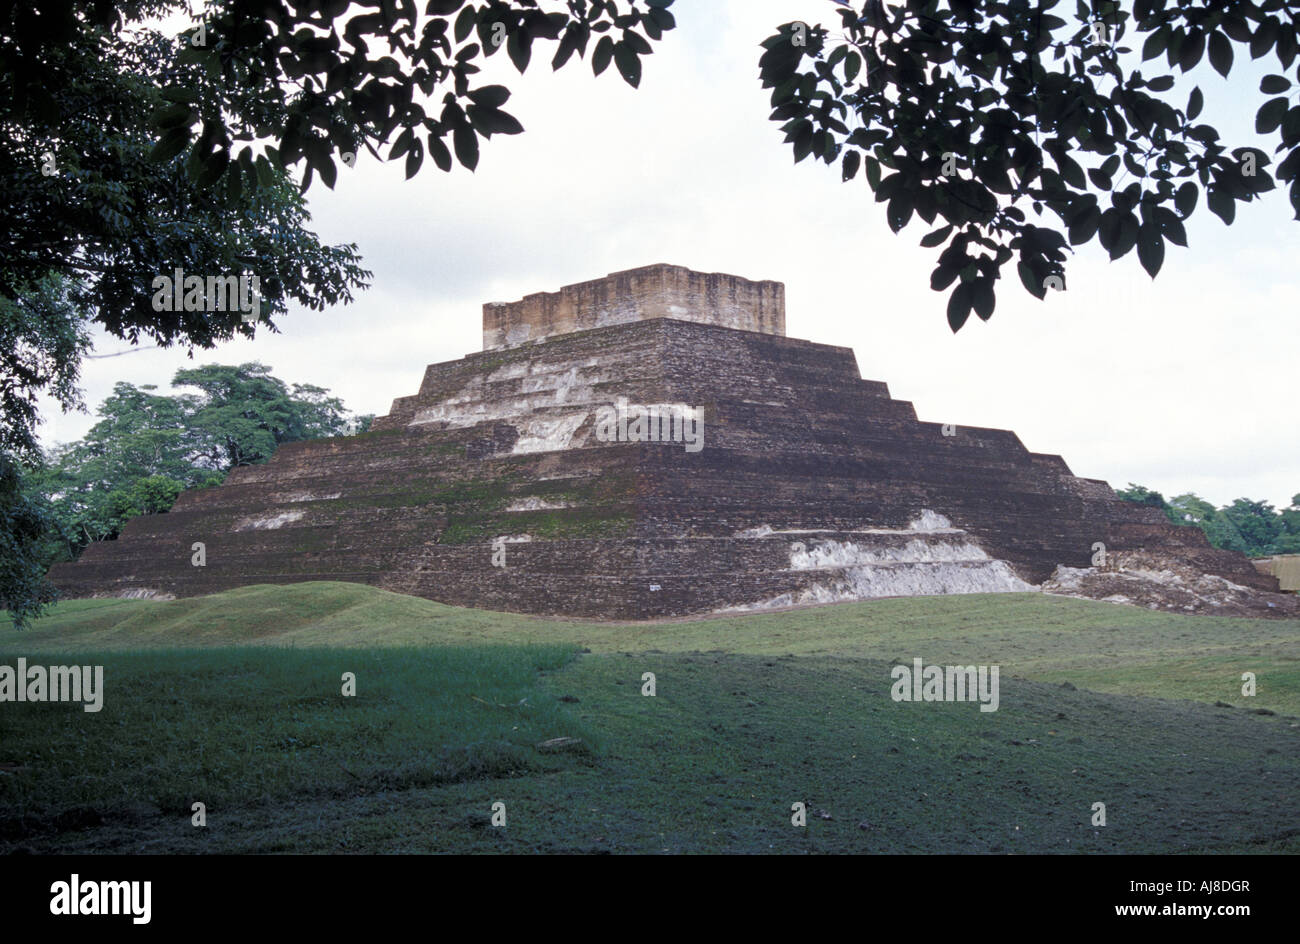 One of the unusual pyramids made of kilned bricks at the Mayan ruins of Comalcalco, Tabasco, Mexico Stock Photo